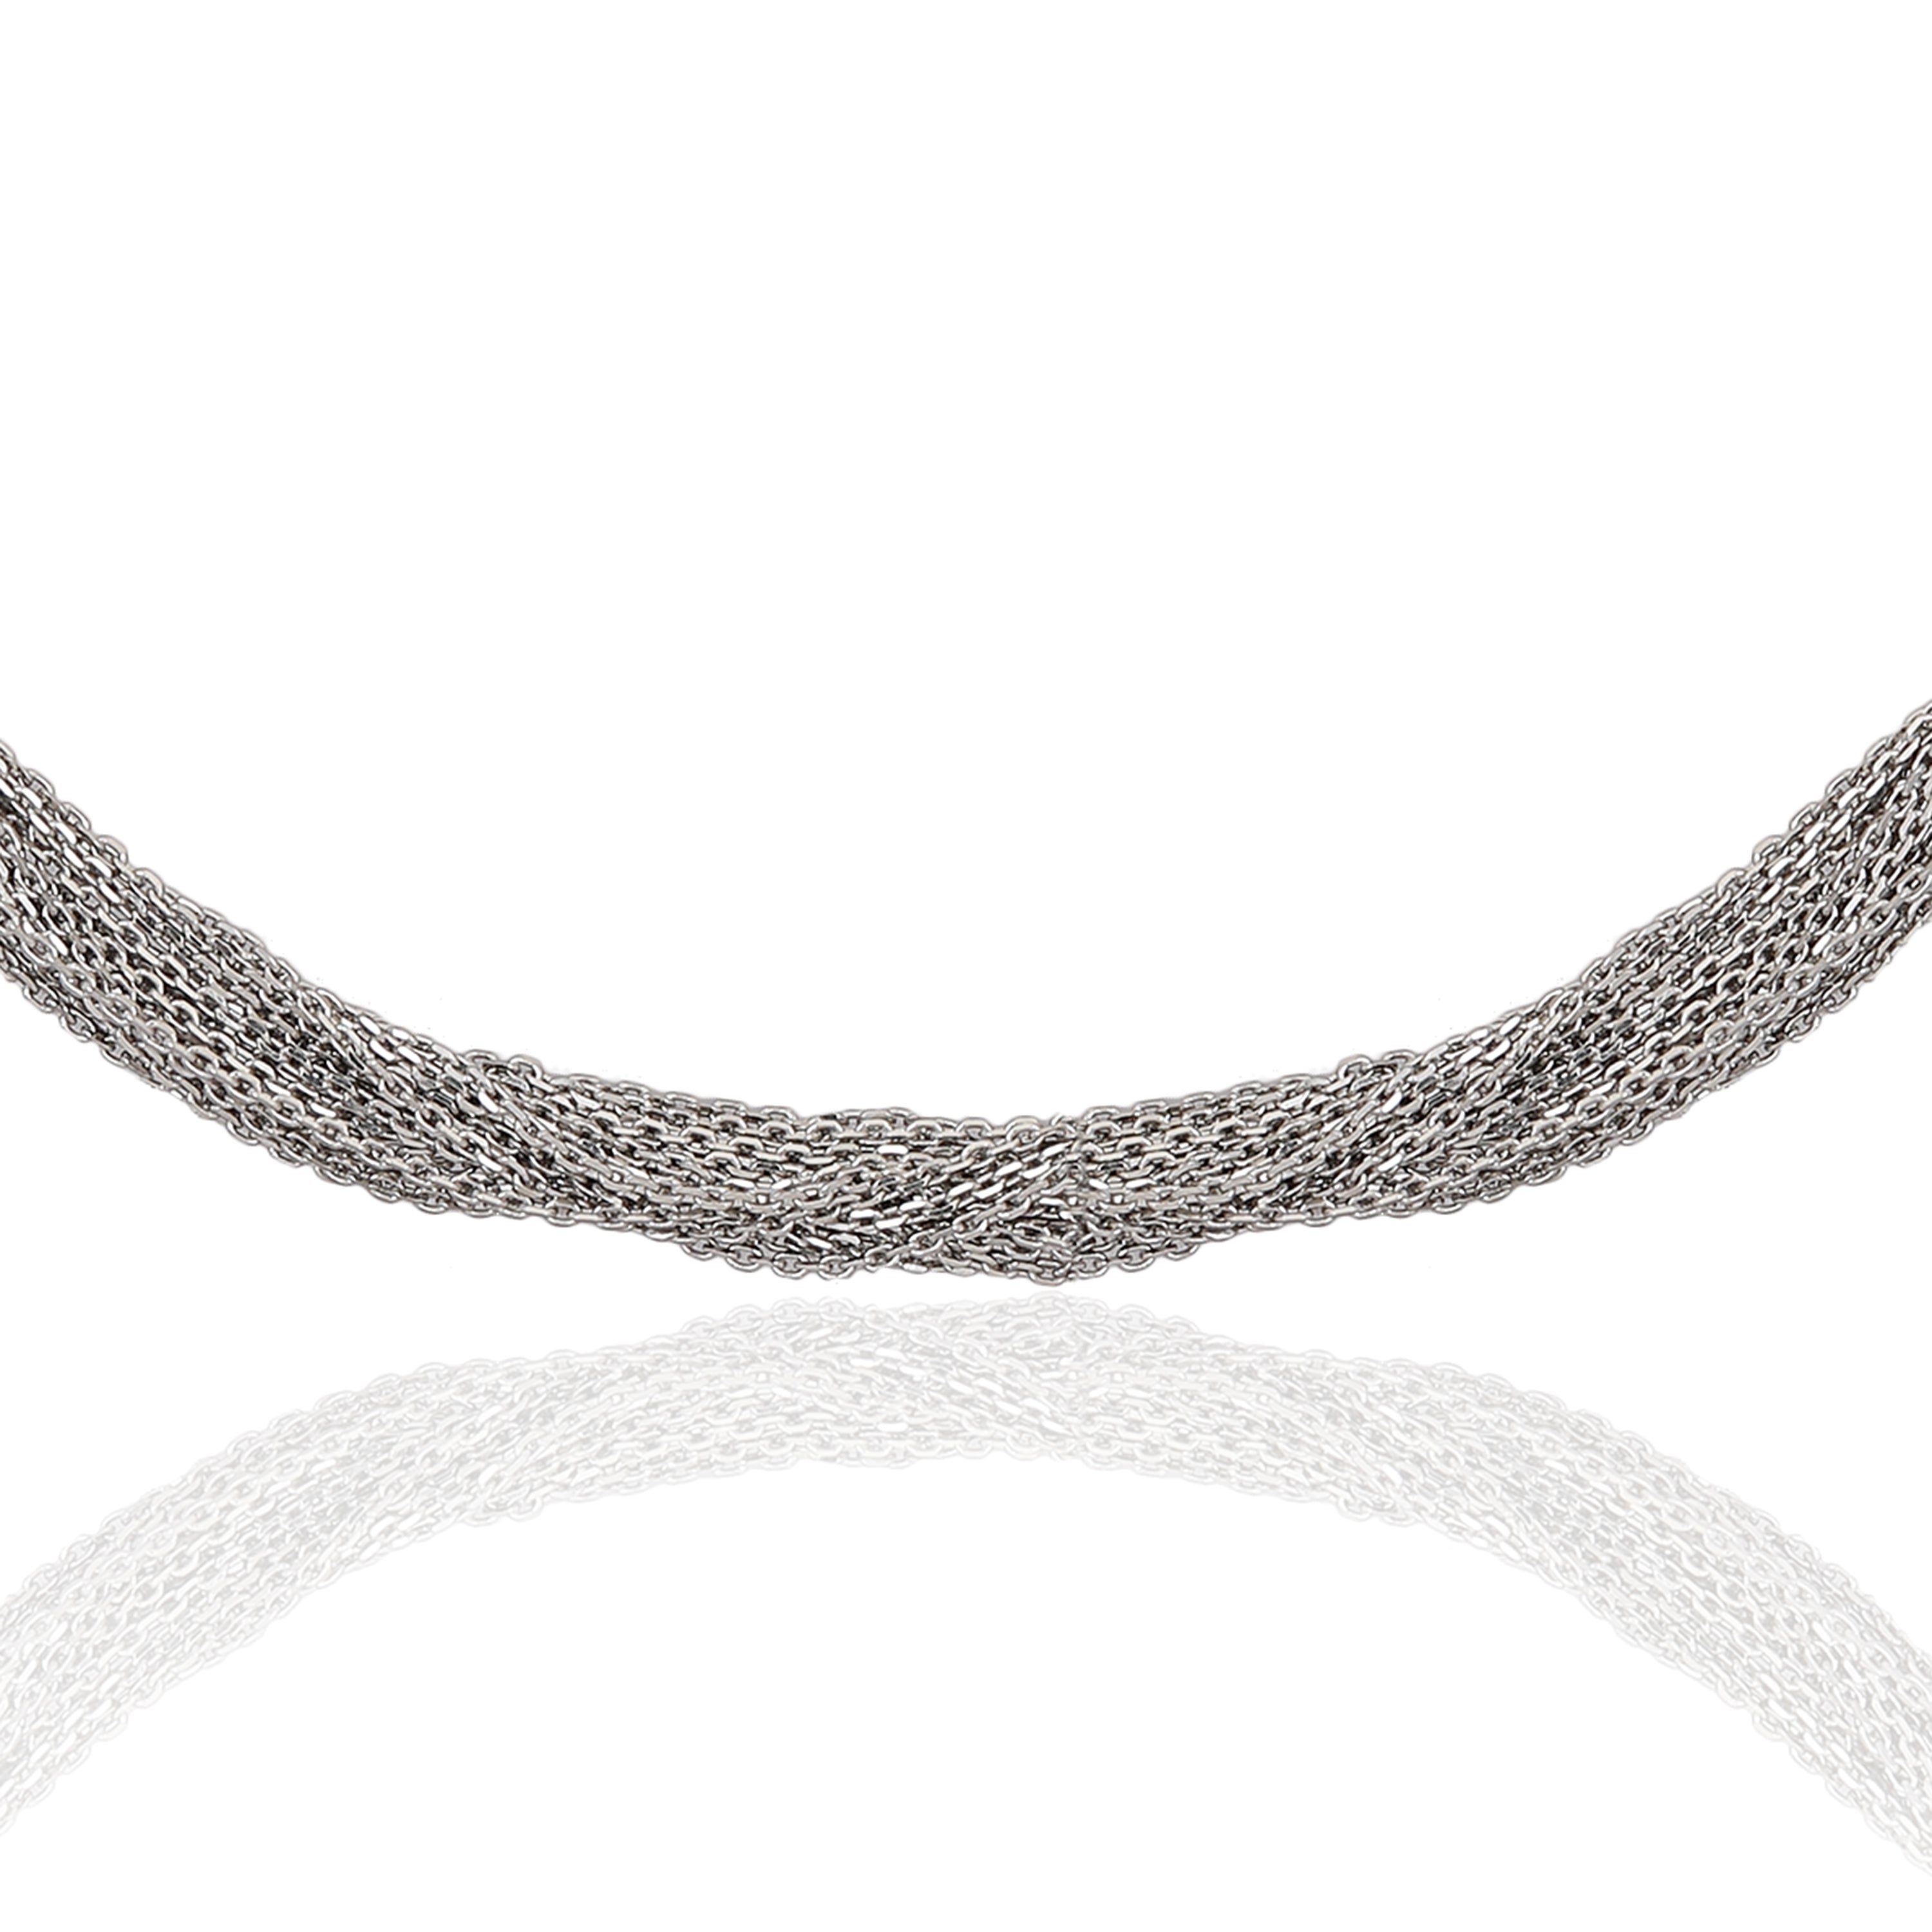 Silver crochet chain